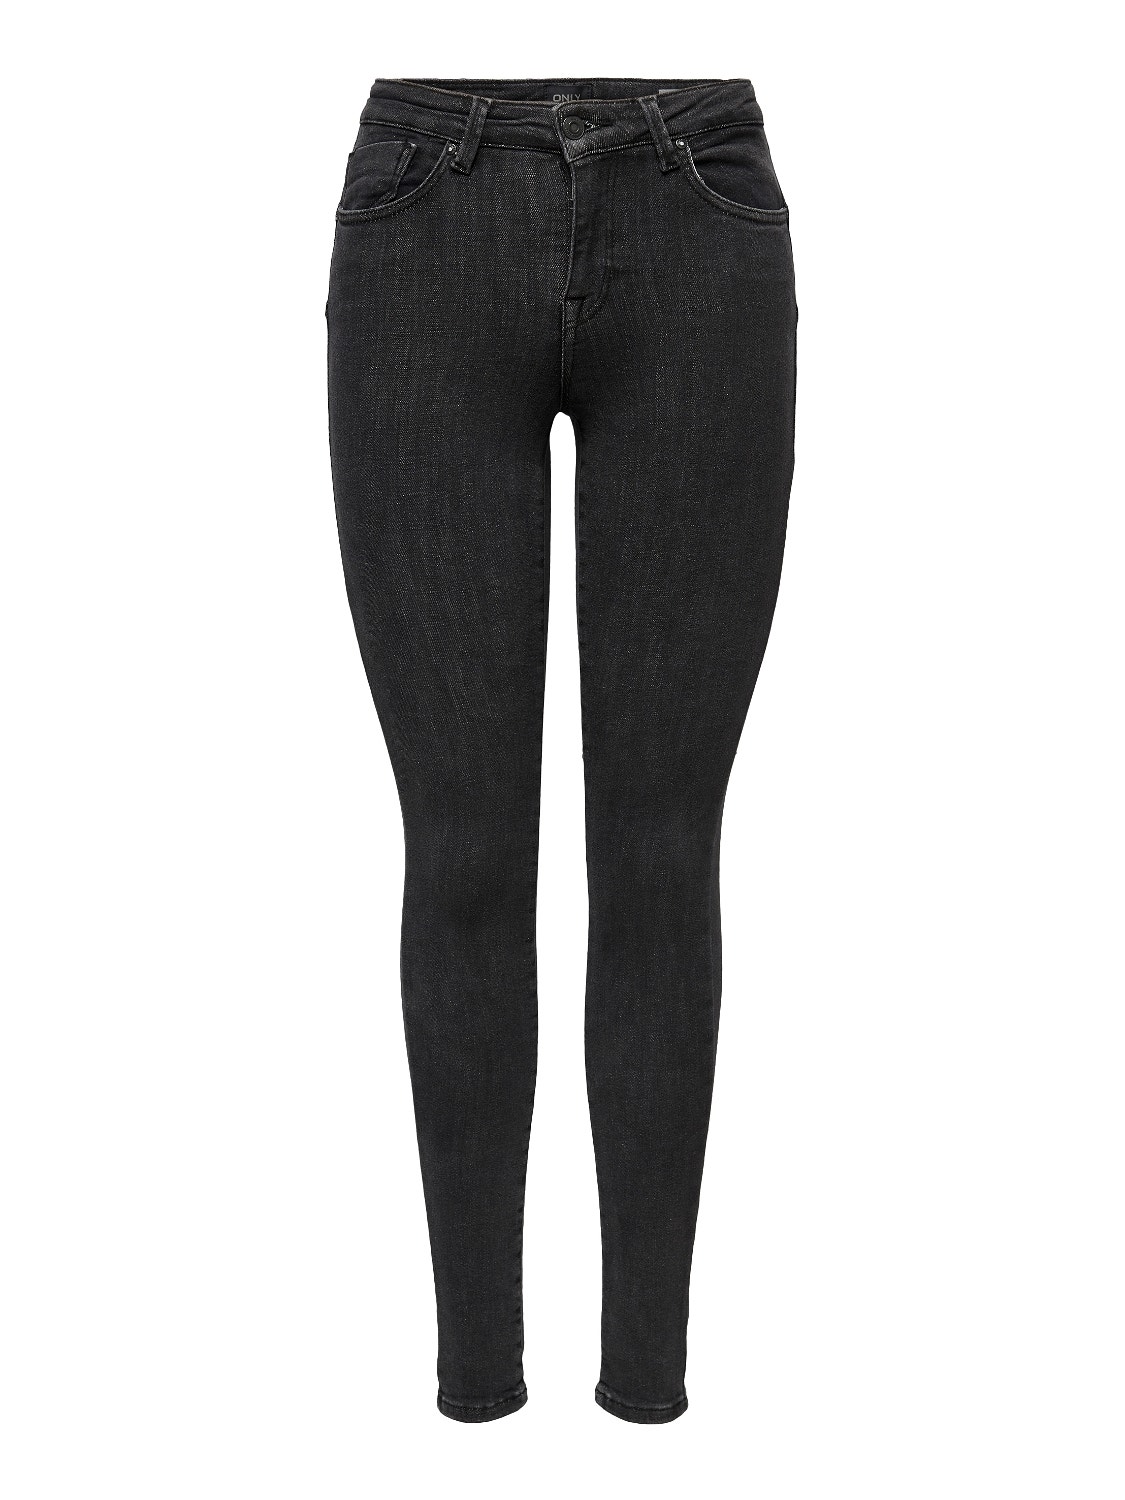 ONLY Skinny Fit Jeans -Medium Grey Denim - 15169896